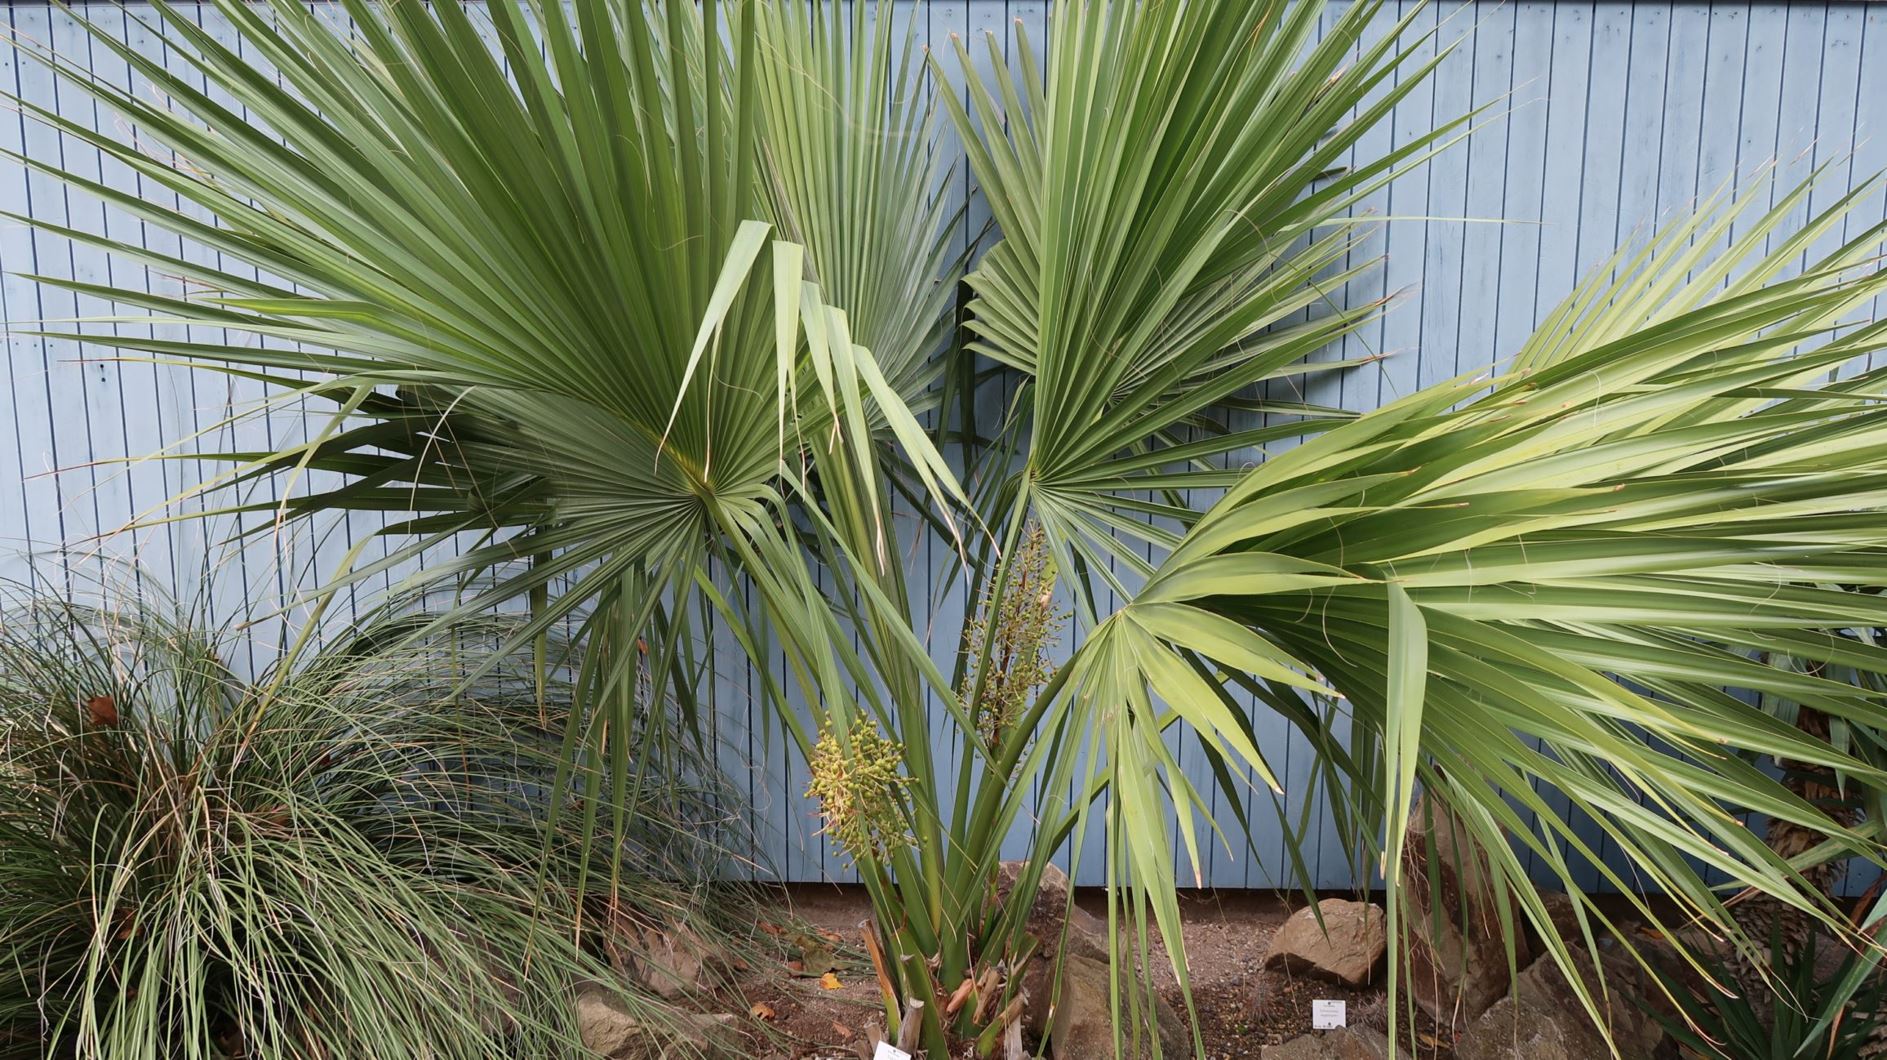 Sabal palmetto - Palmettopalme, Cabbage palm, palmetto